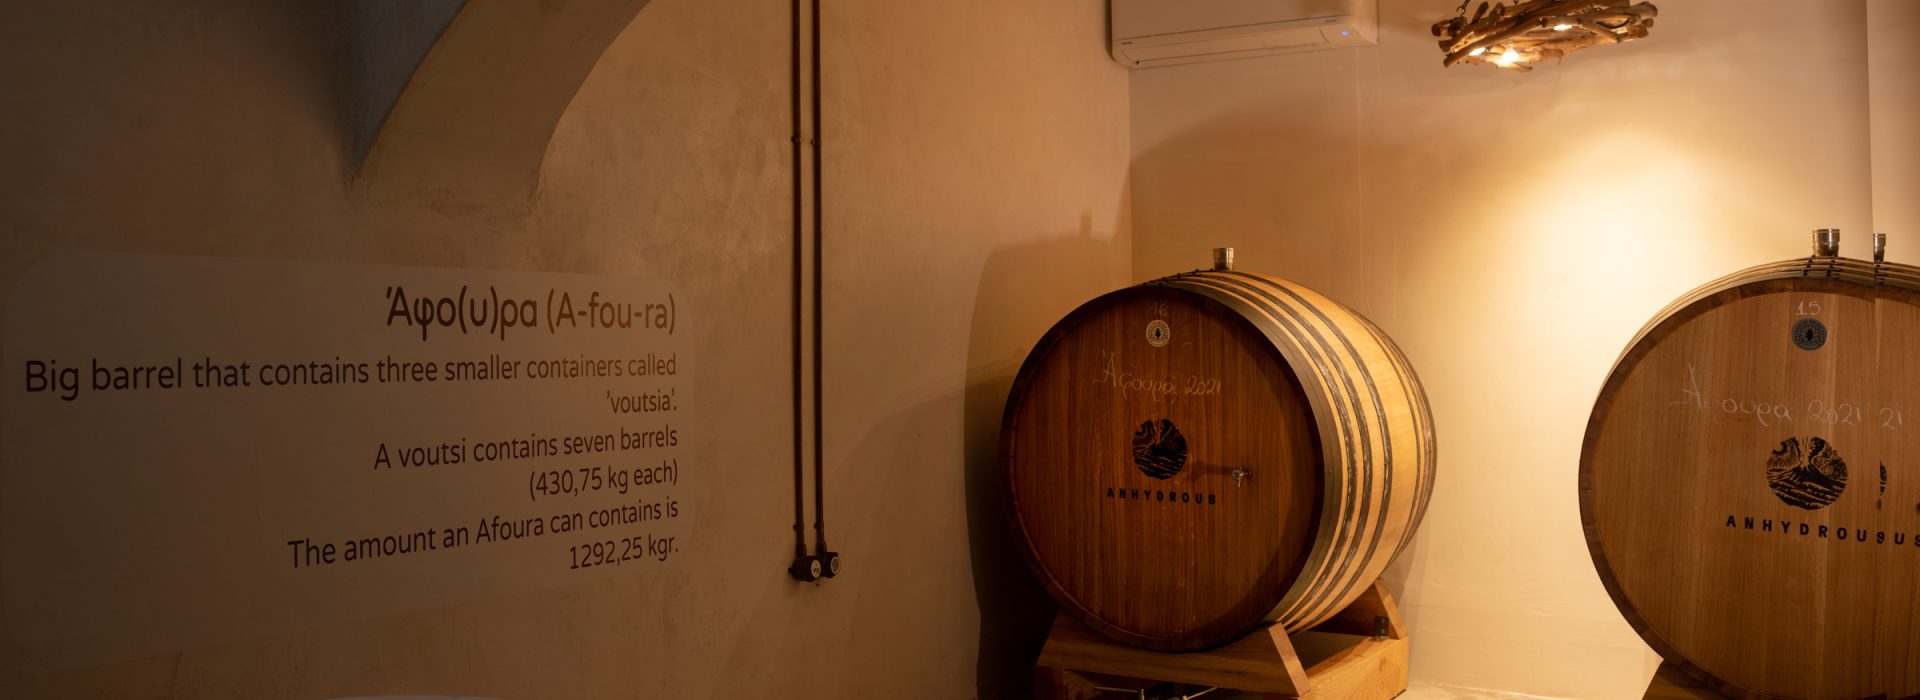 Anhydrous Winery in Santorini island by Avantis Estate